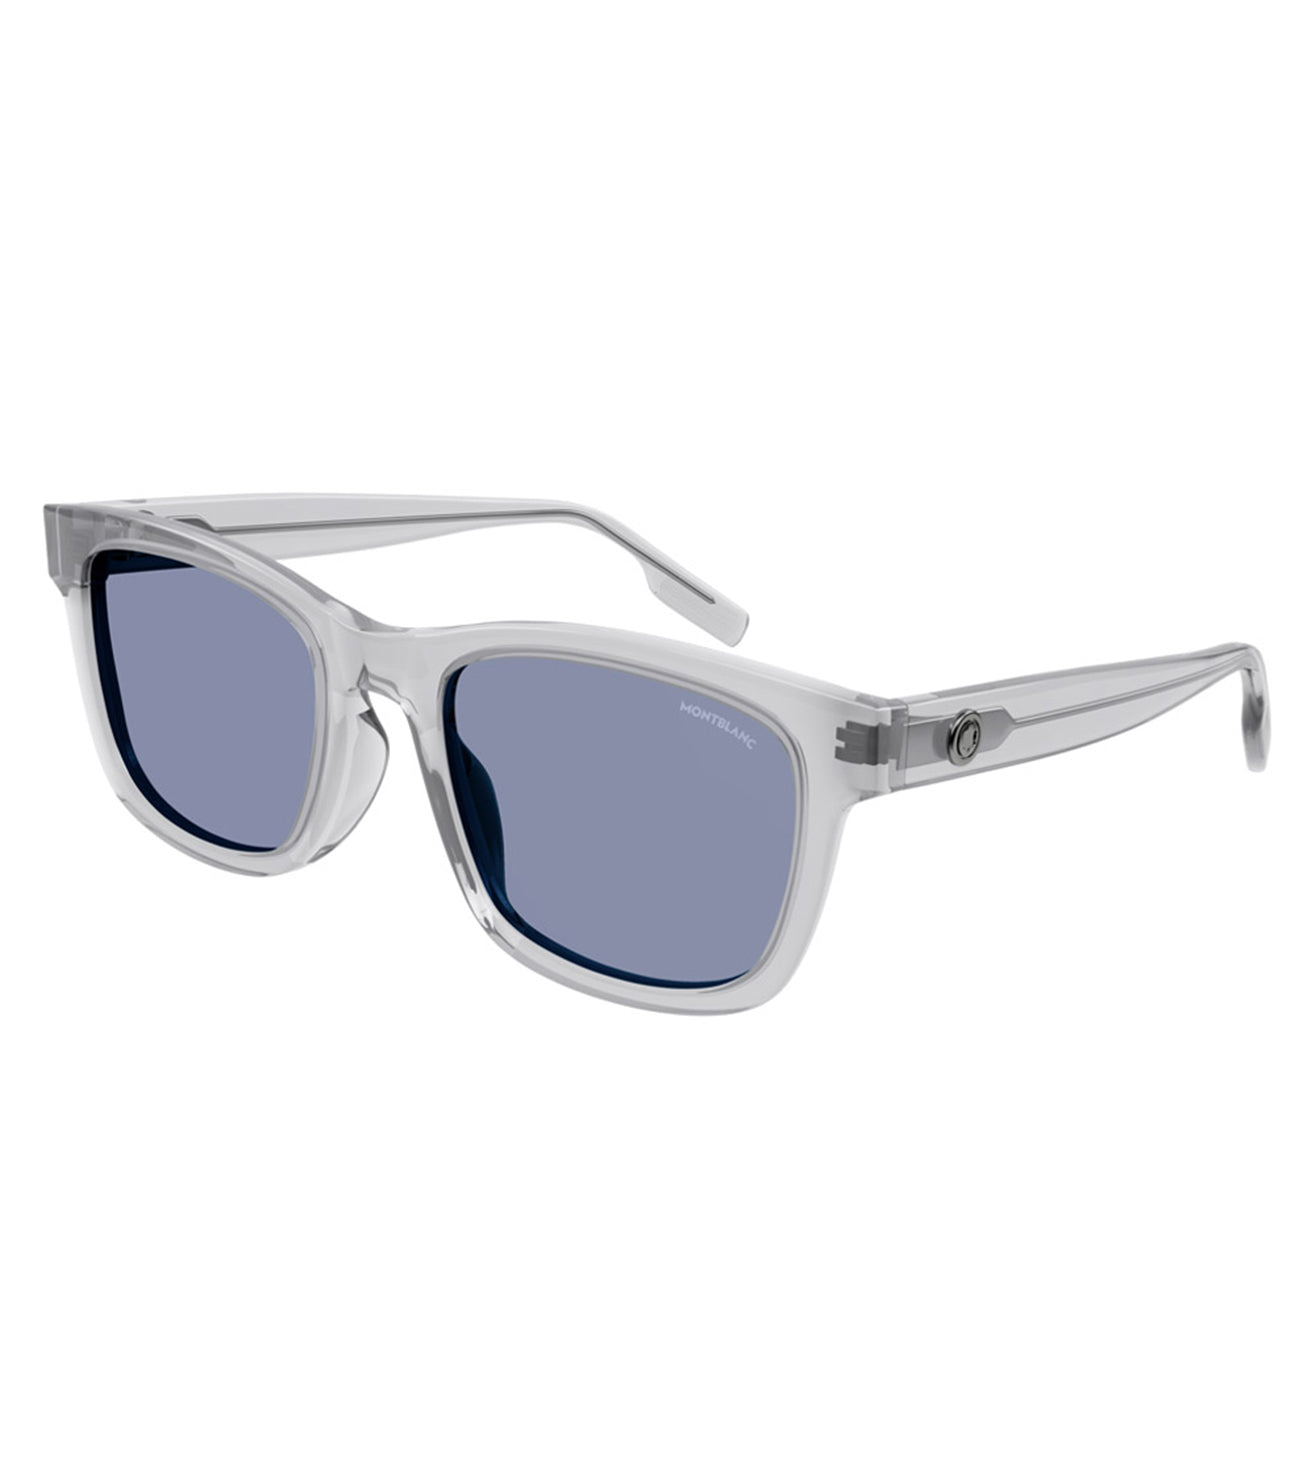 Montblanc Men's Blue Wayfarer Sunglasses